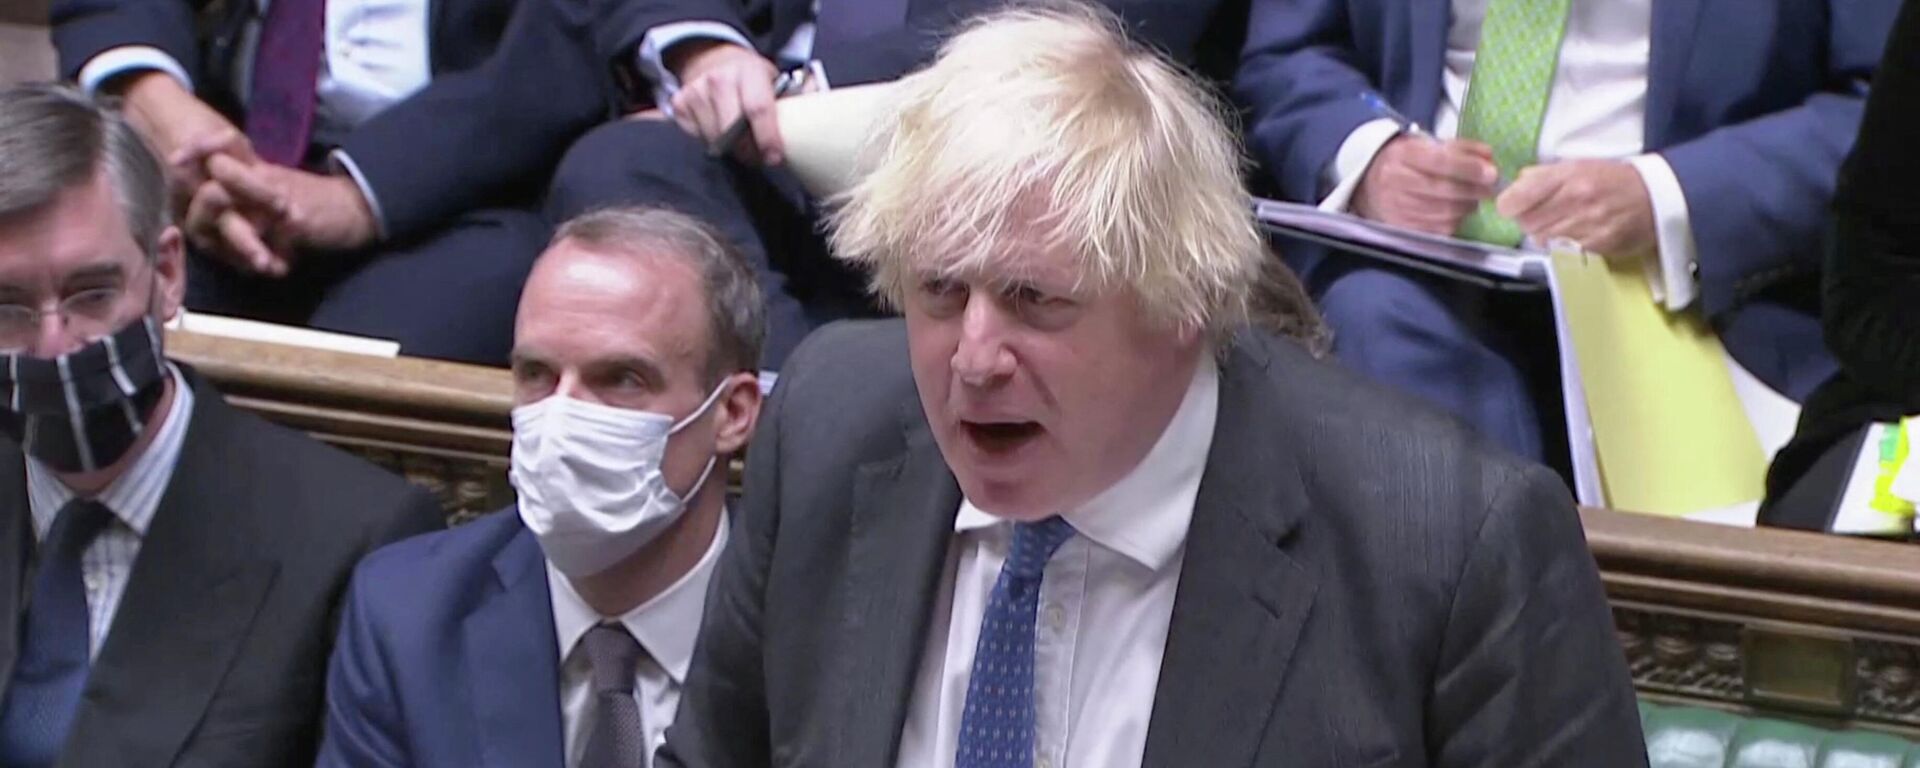 British Prime Minister Boris Johnson speaks during the weekly question time debate at Parliament in London, Britain, December 15, 2021 - Sputnik International, 1920, 15.12.2021